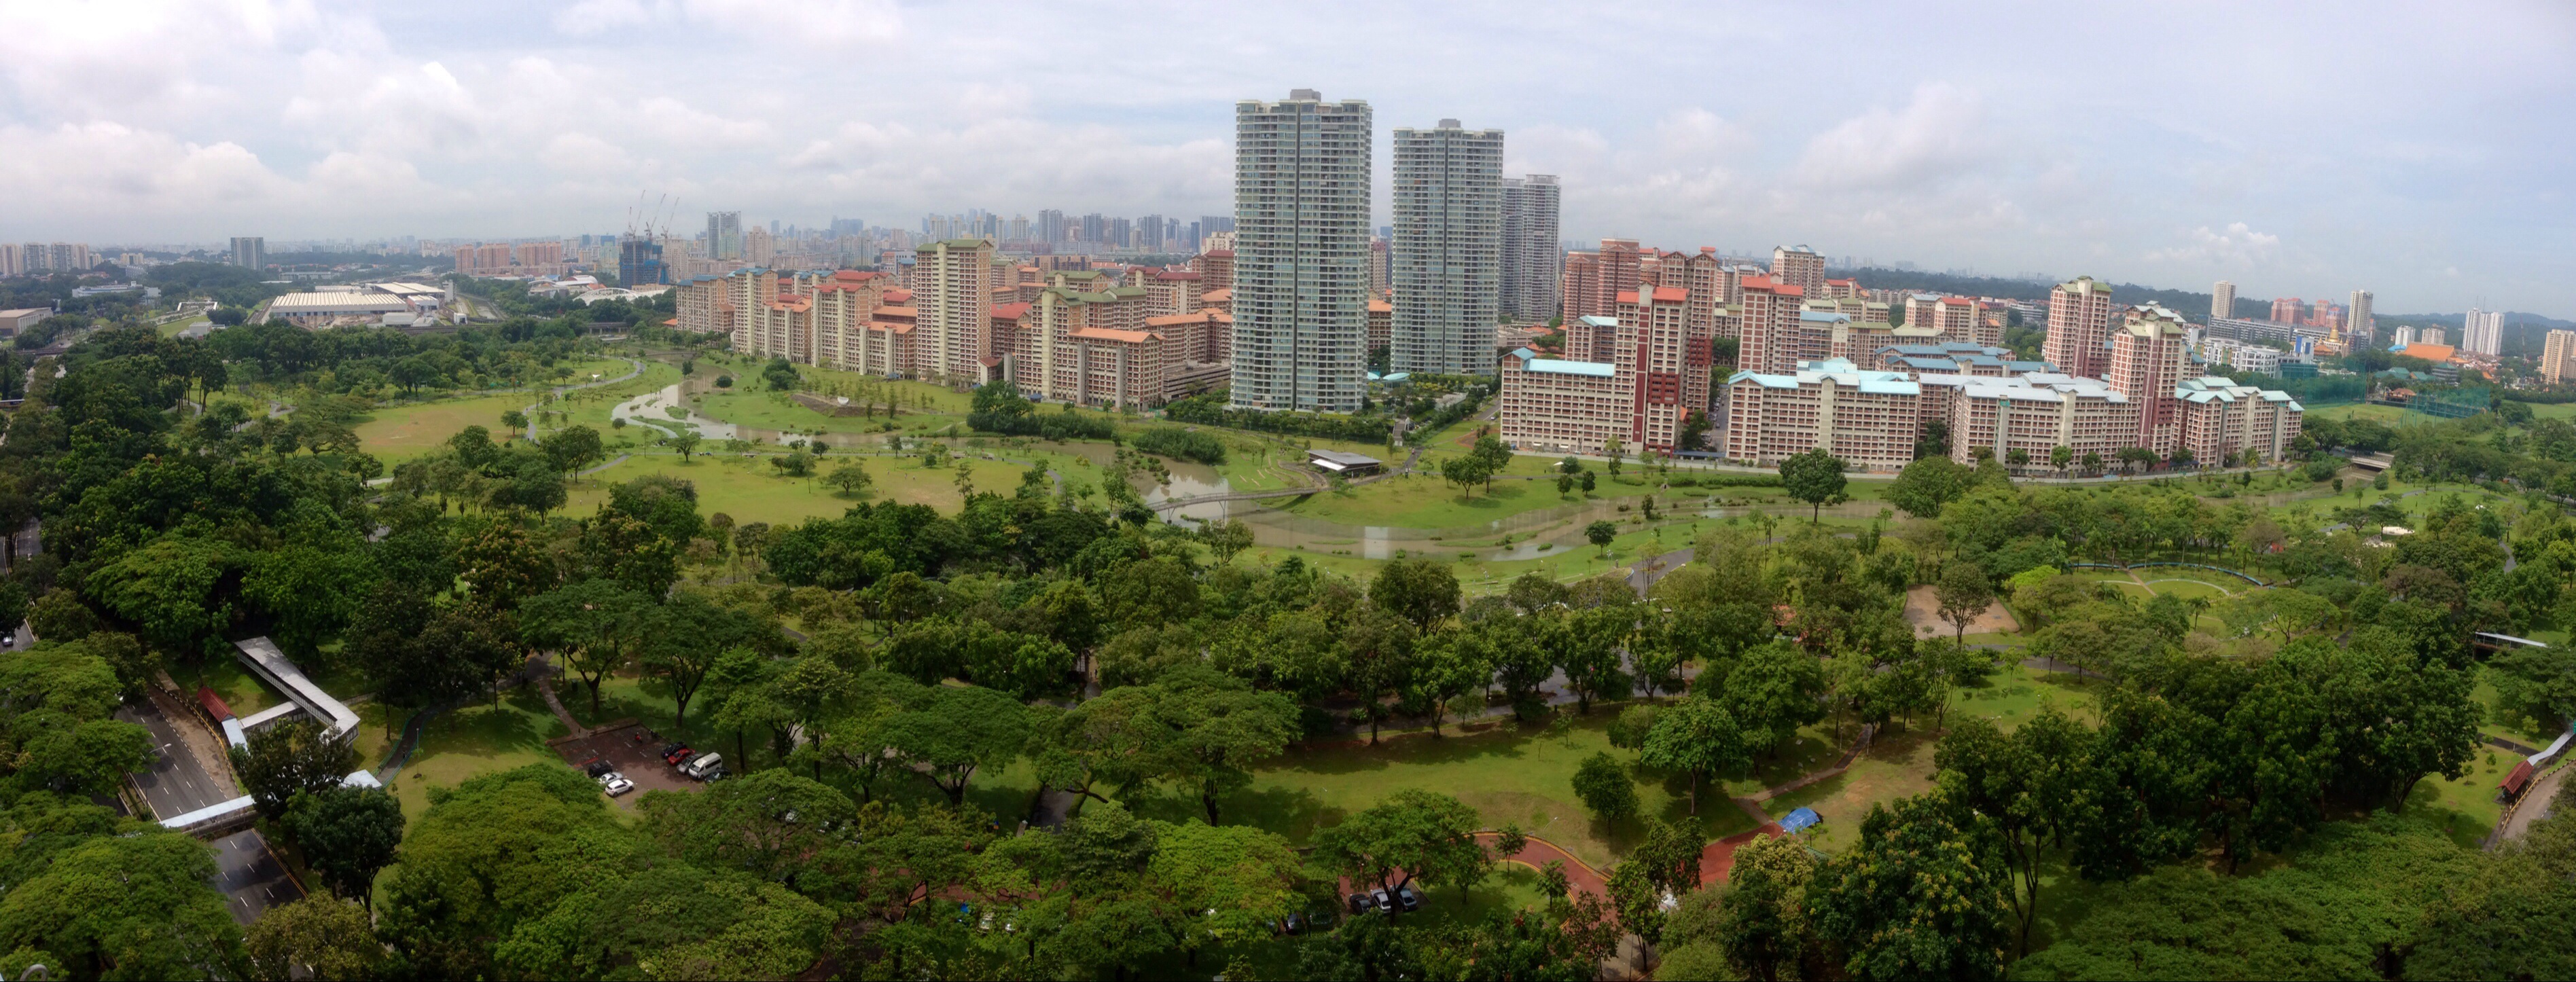 Mo view. Singapore Bishan Park. Гайд парк сверху. Бишань город. Бишан анг МО Кио парк.